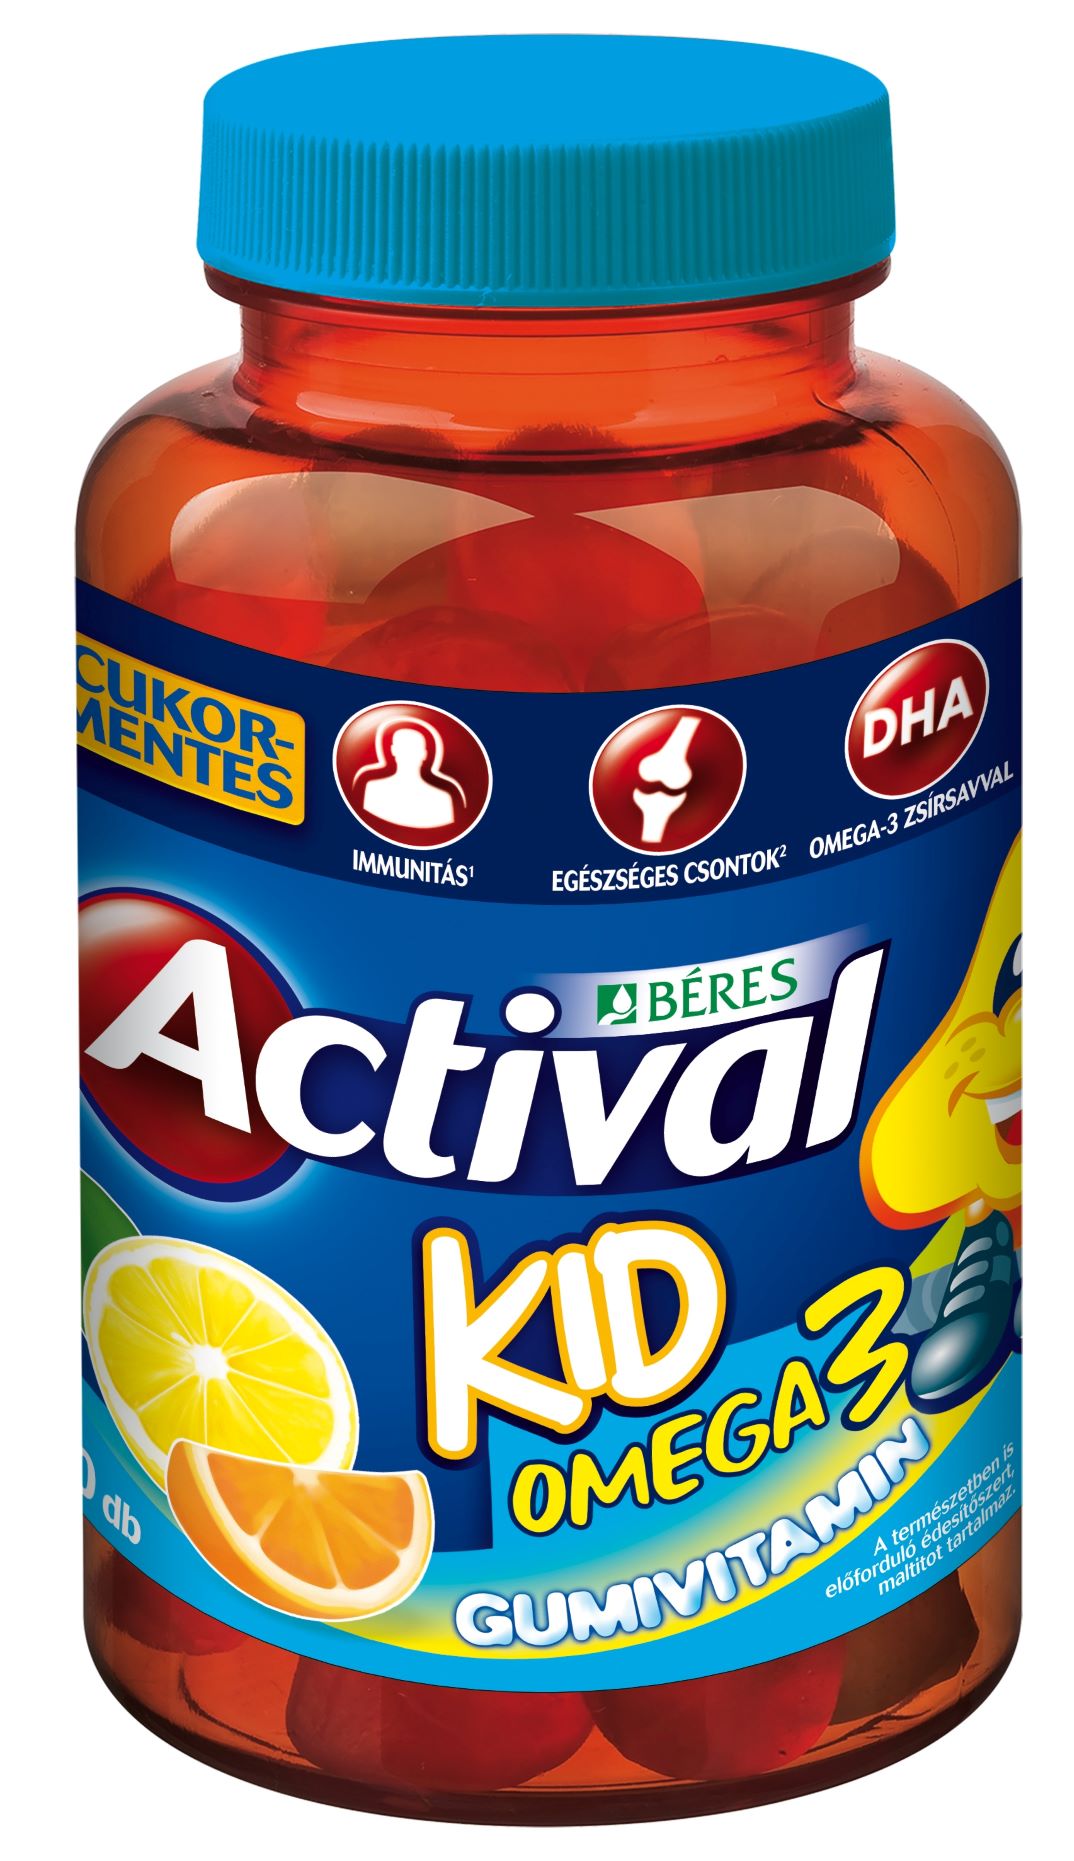 Actival Kid Omega3 Gumivitamin gumitabletta